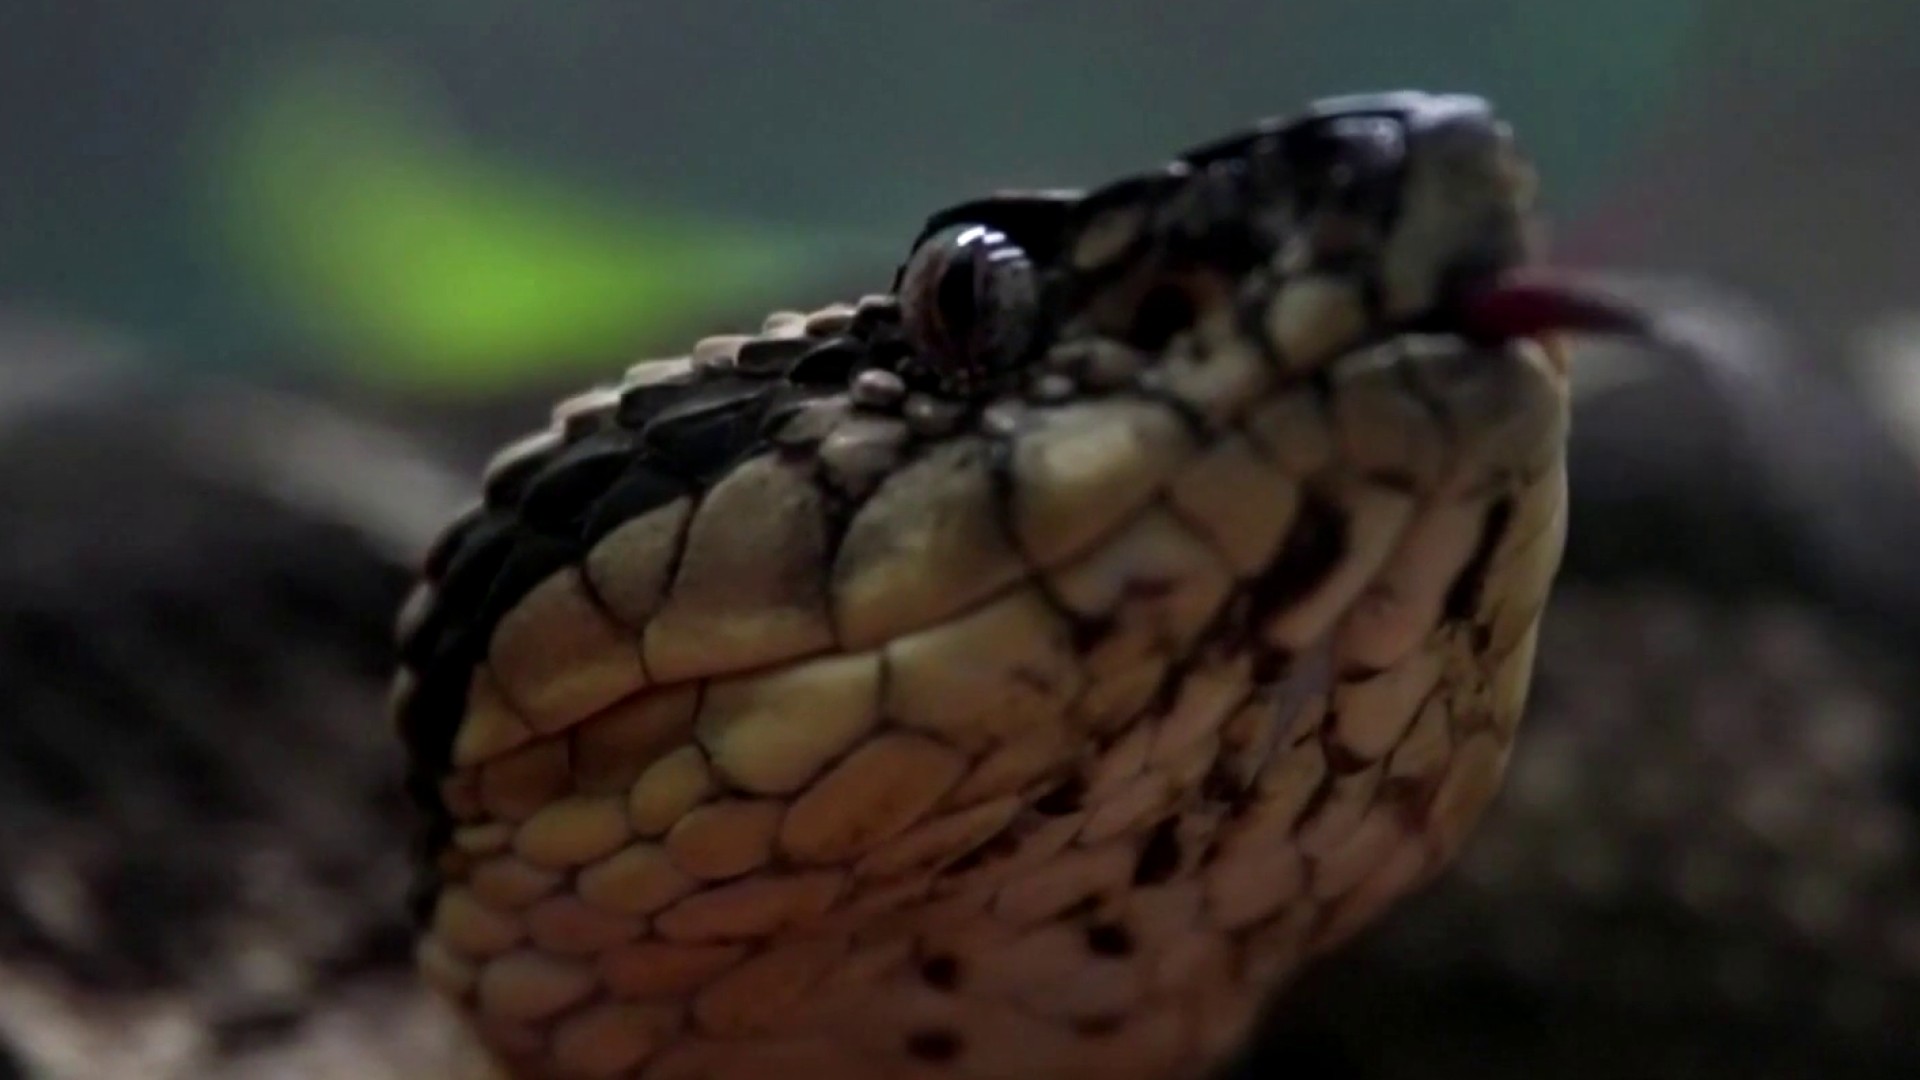 Www Porn 300 Video Download Com - Snake eats gator: More than a viral video